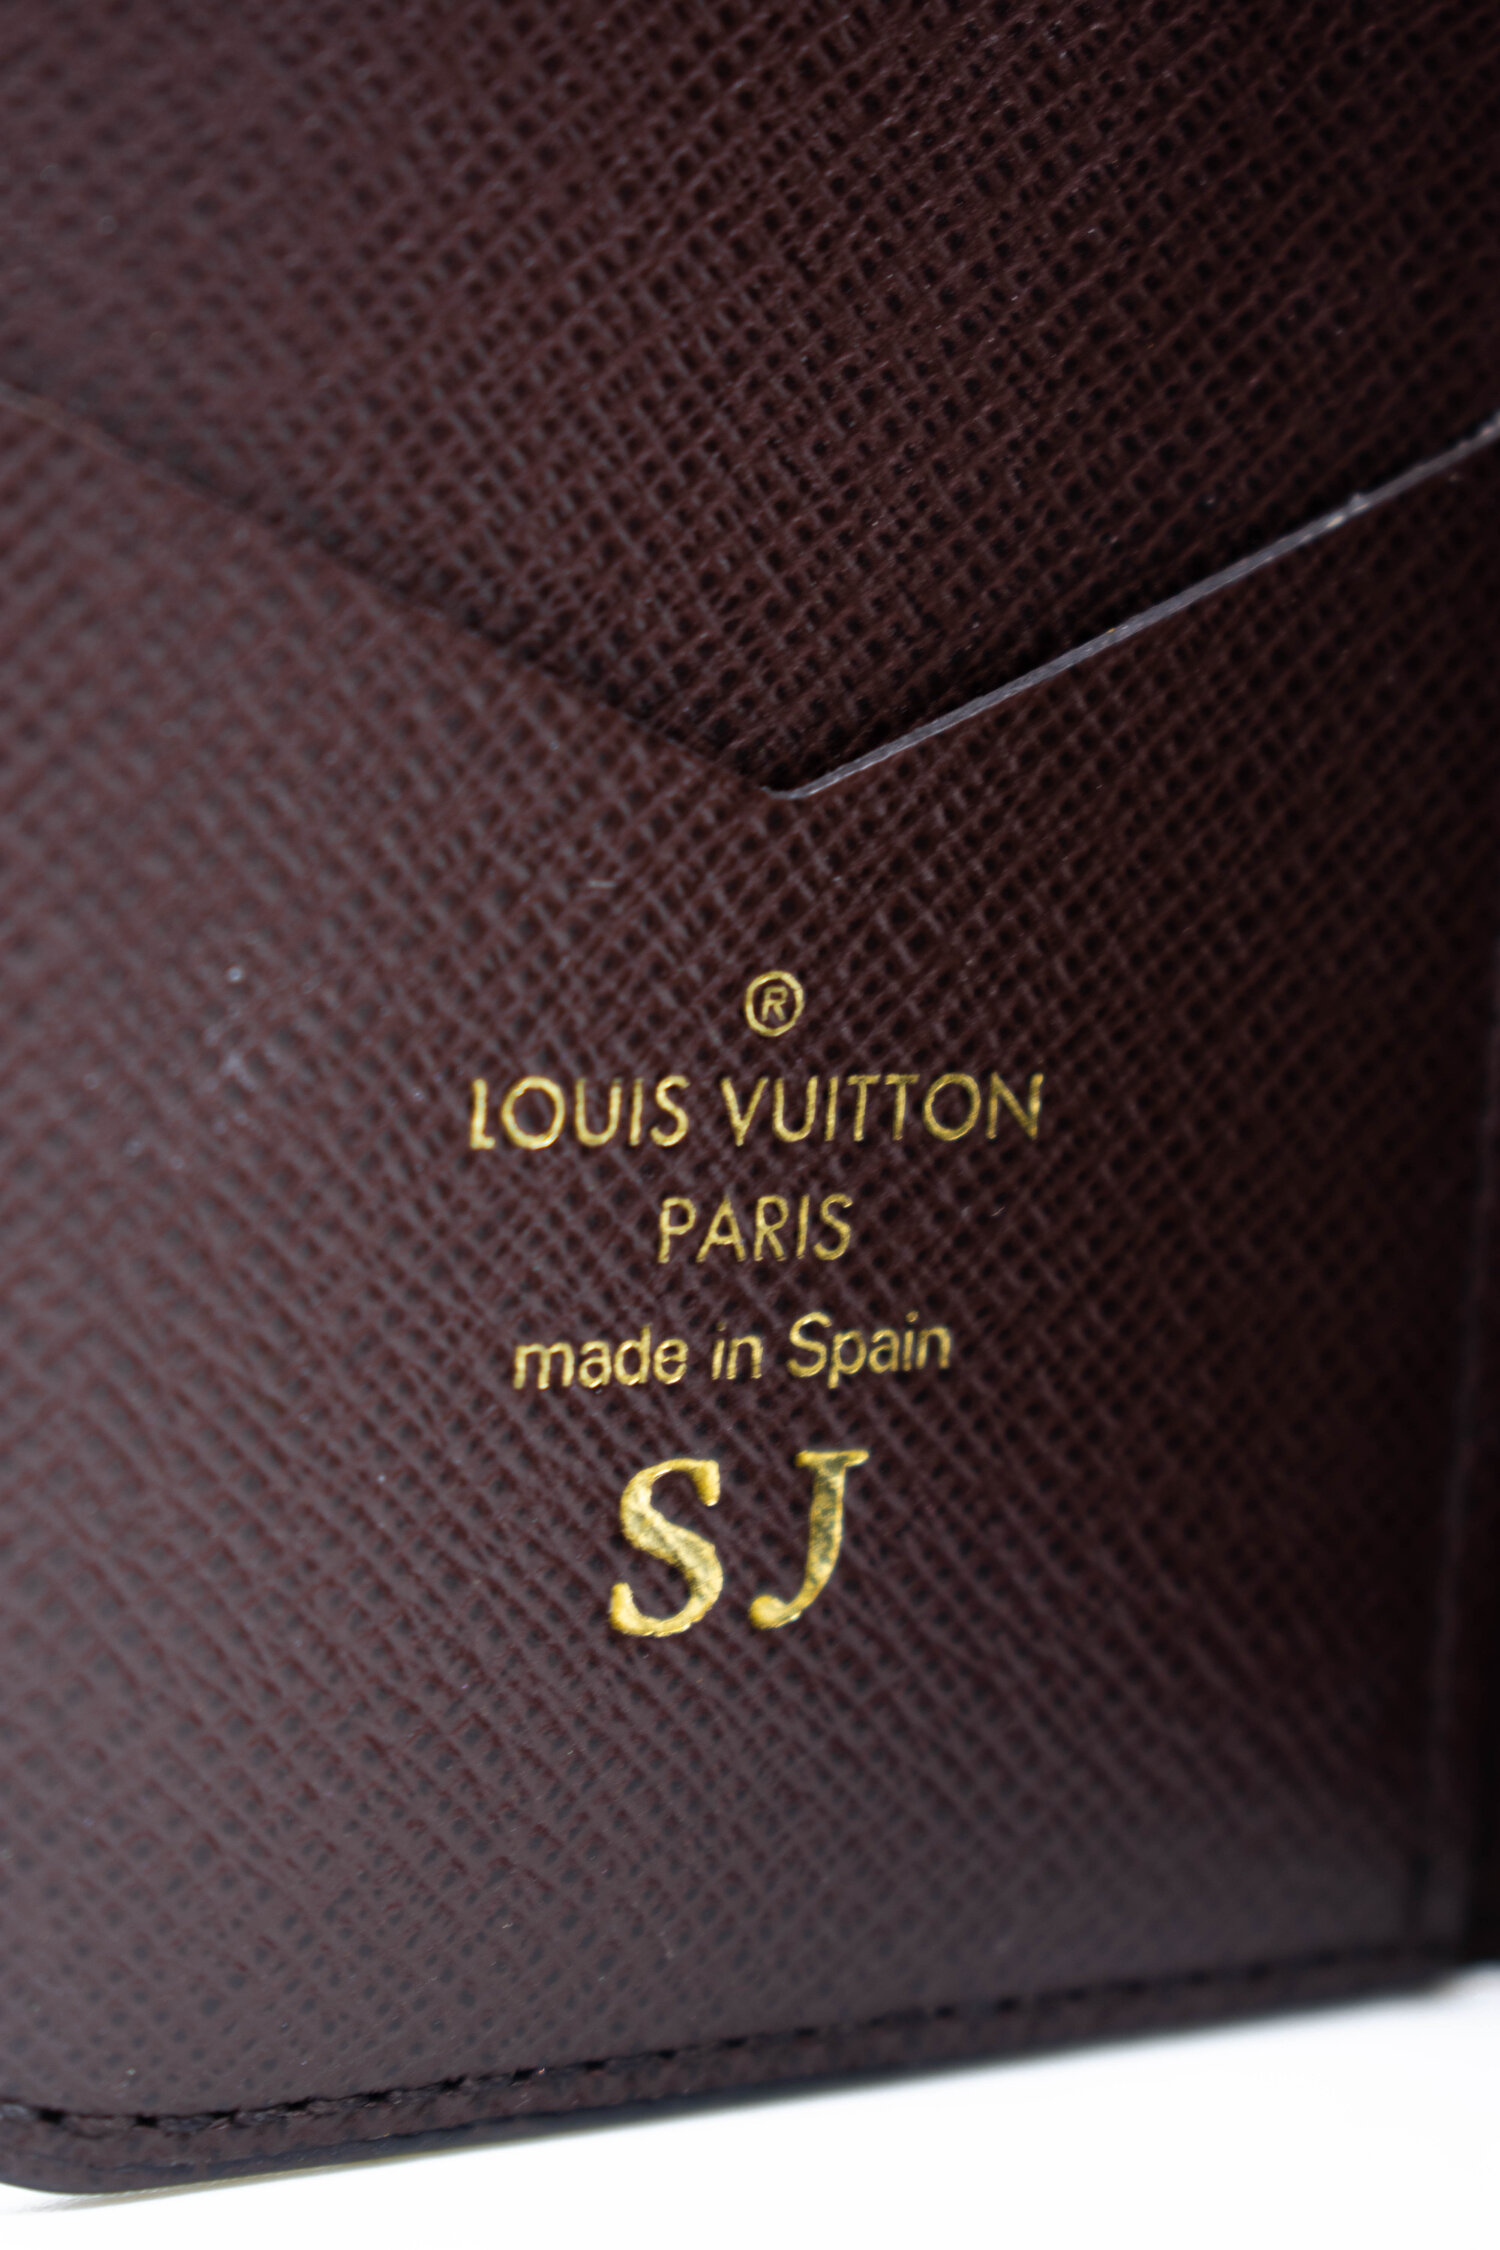 Sinewi Begrænsninger båd Louis Vuitton iPhone 7/8 Case — BLOGGER ARMOIRE